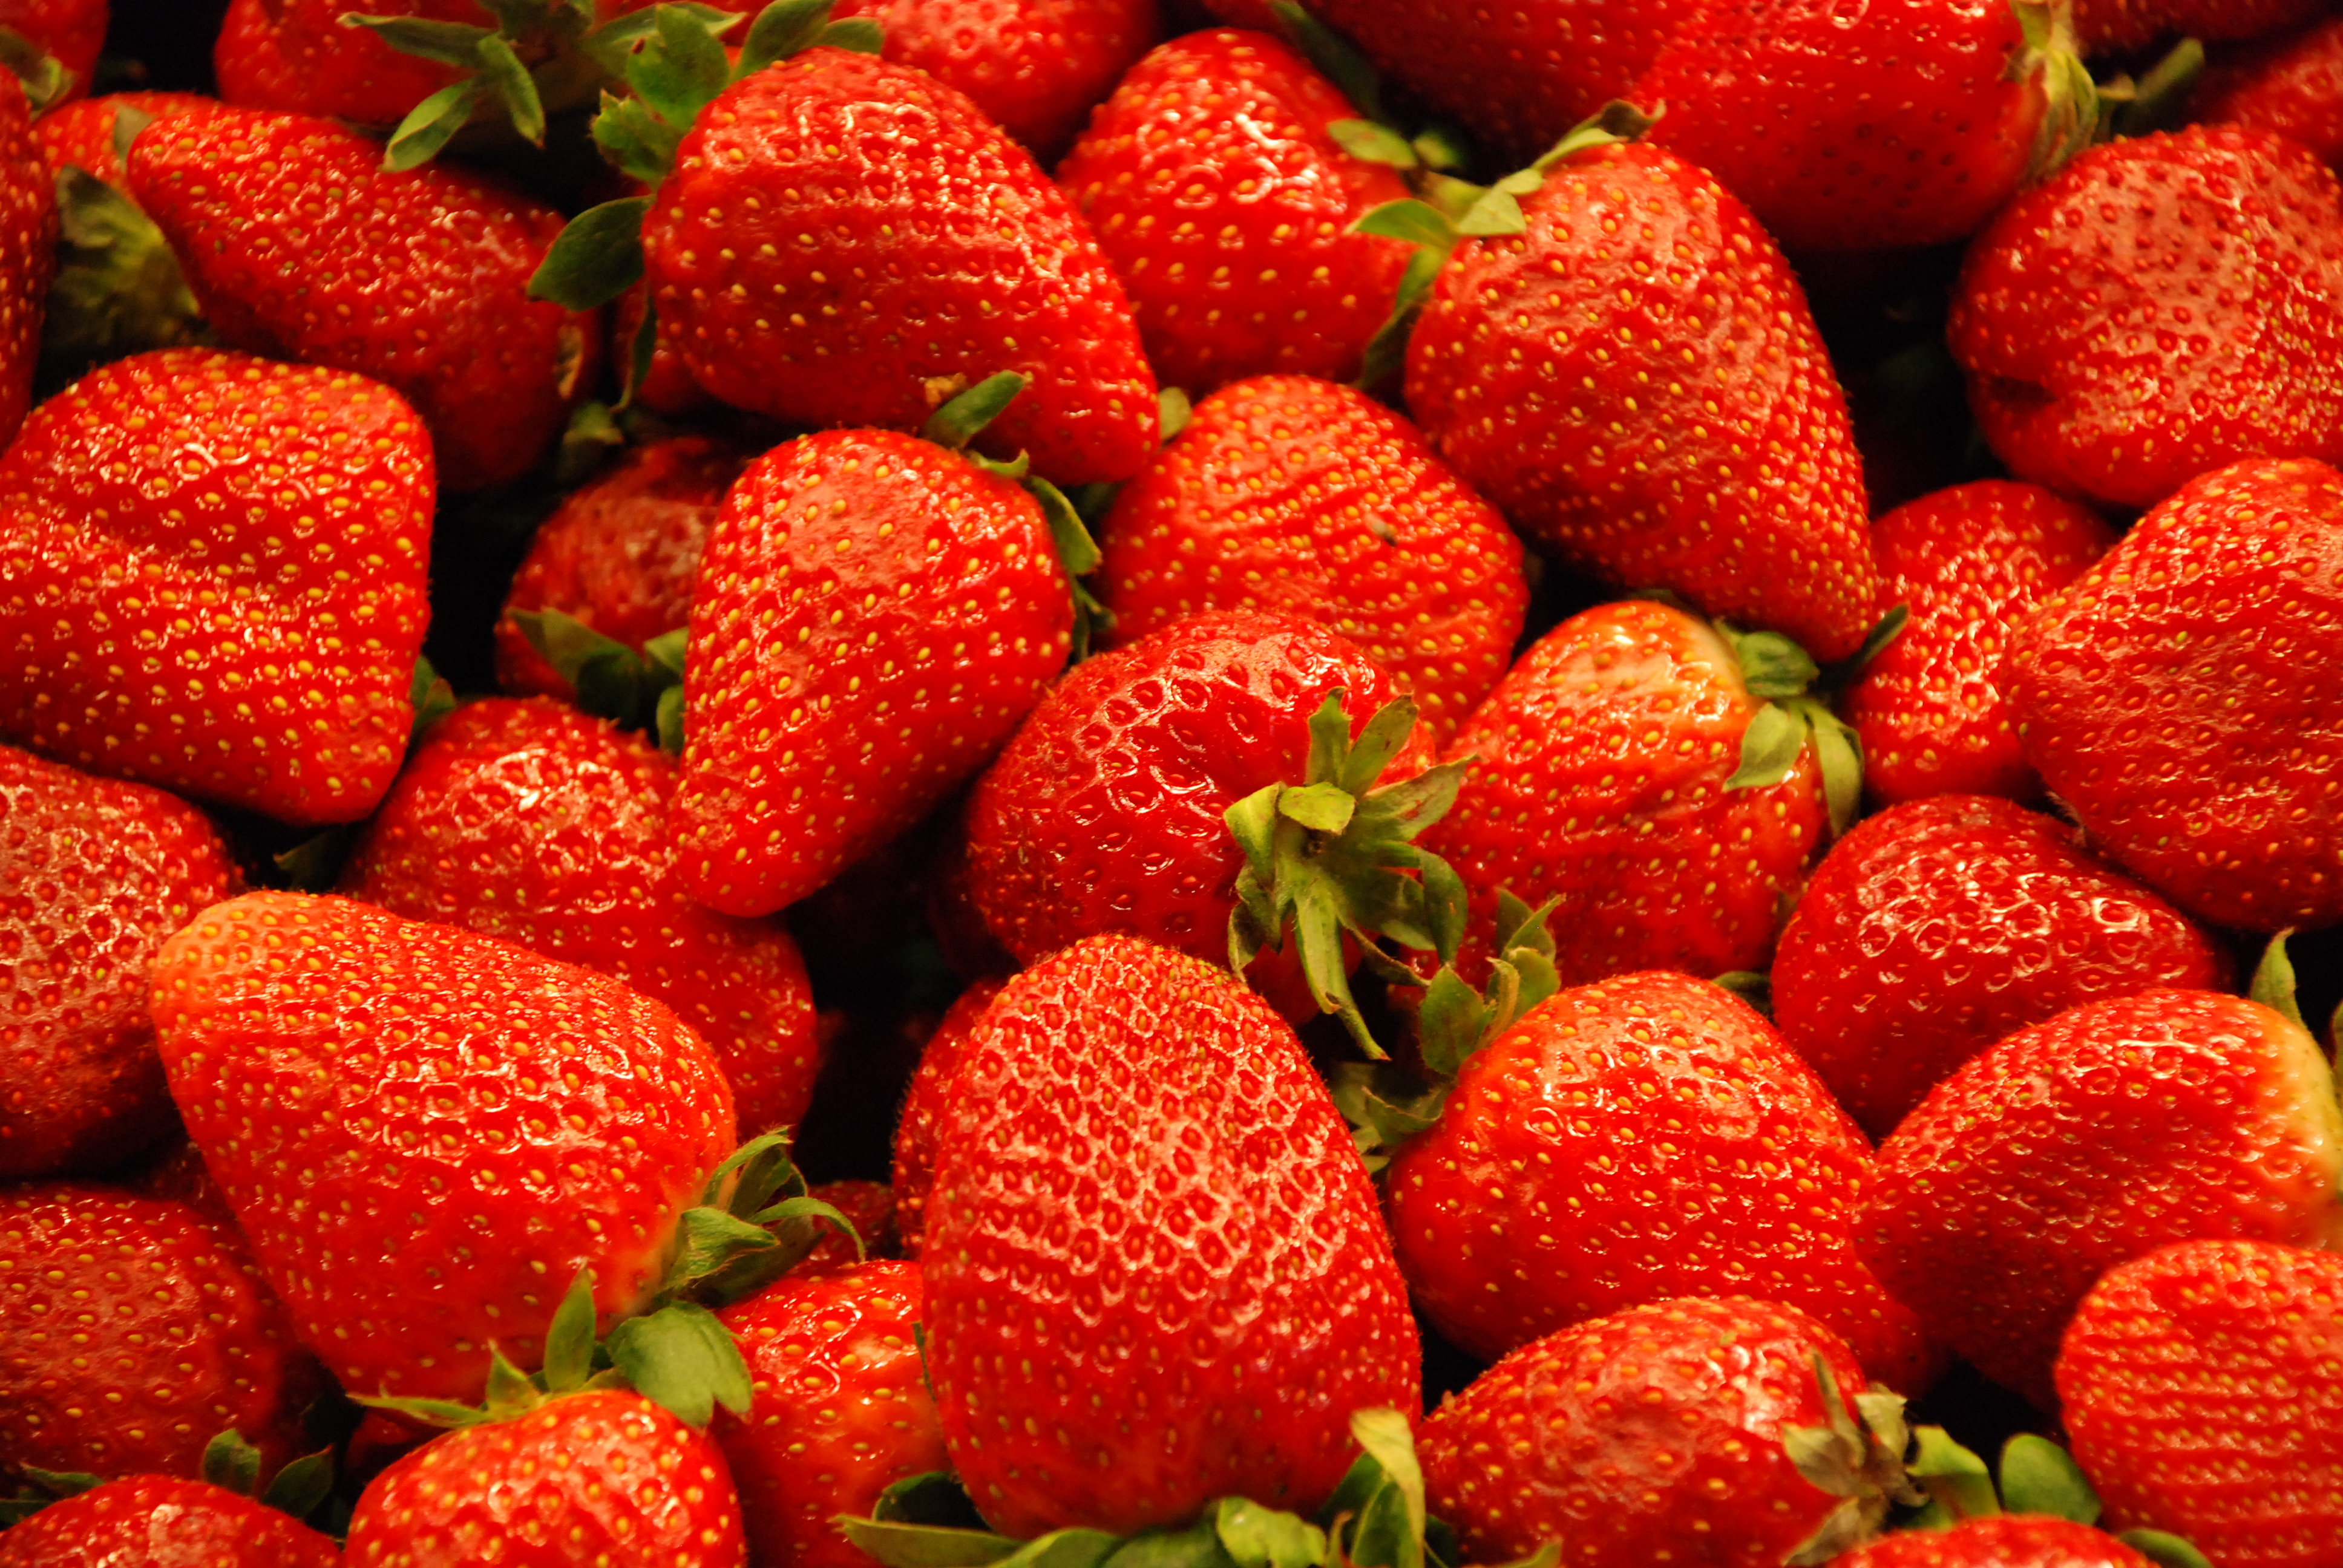 strawberry benefits